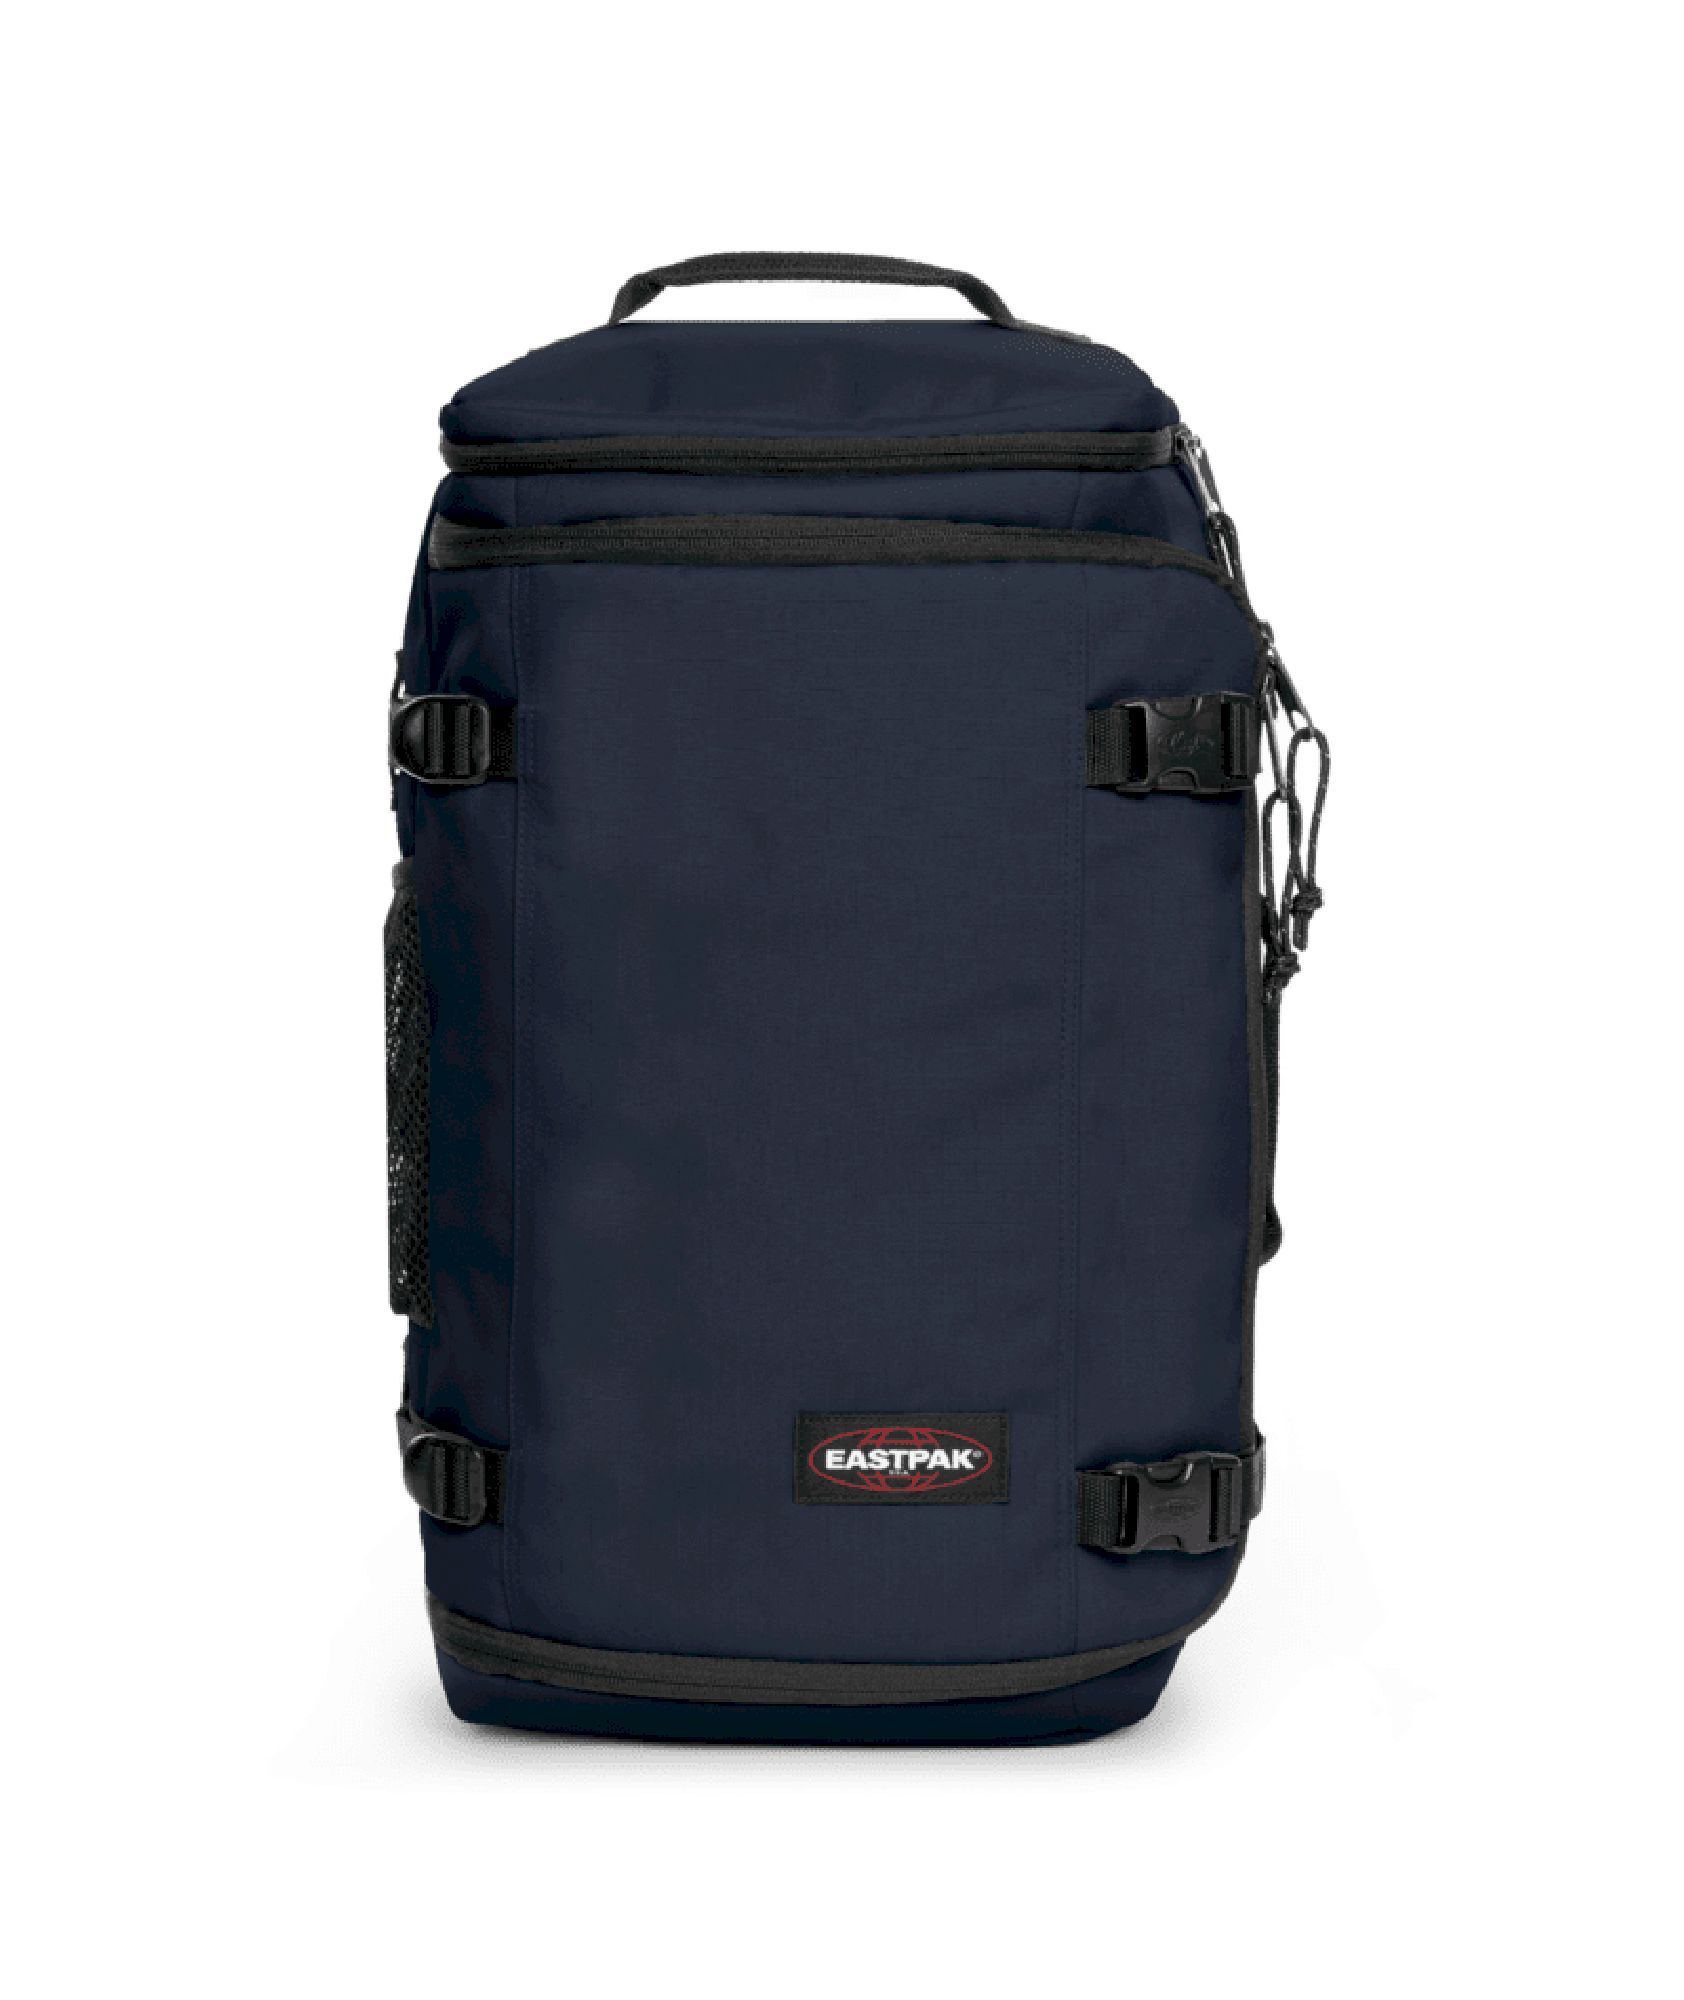 Eastpak Carry Pack - Travel backpack | Hardloop